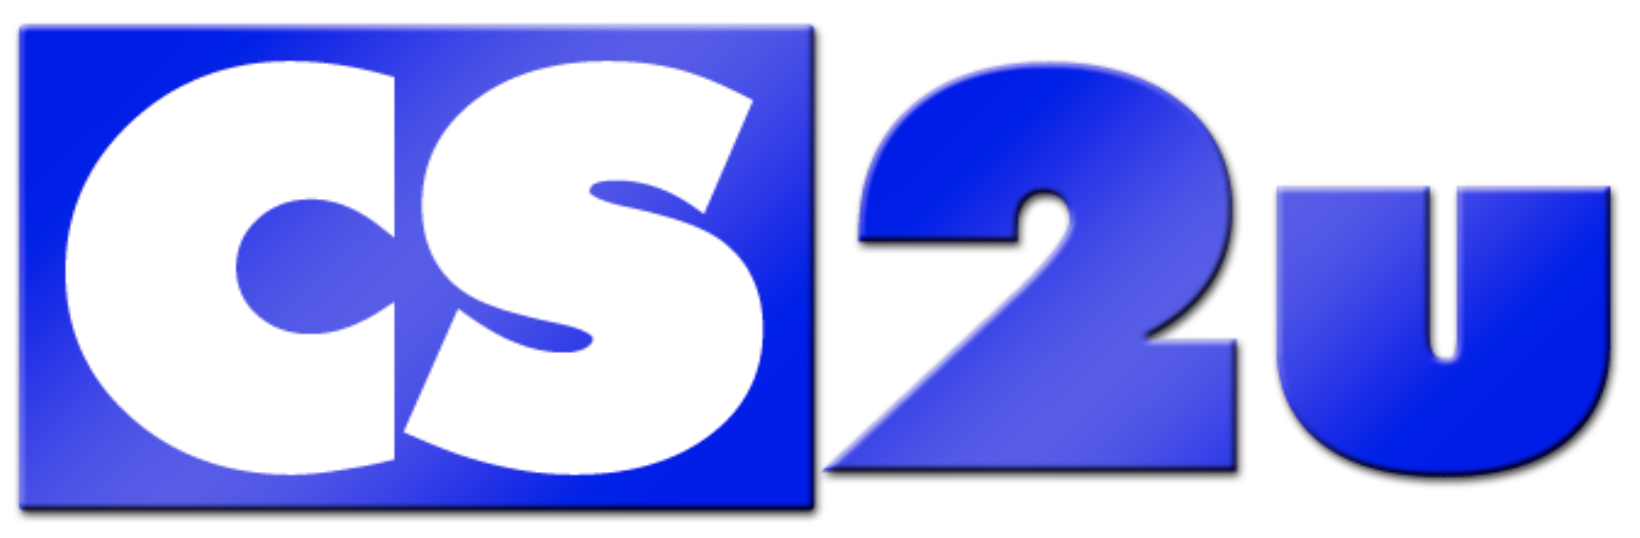 CS2u logo